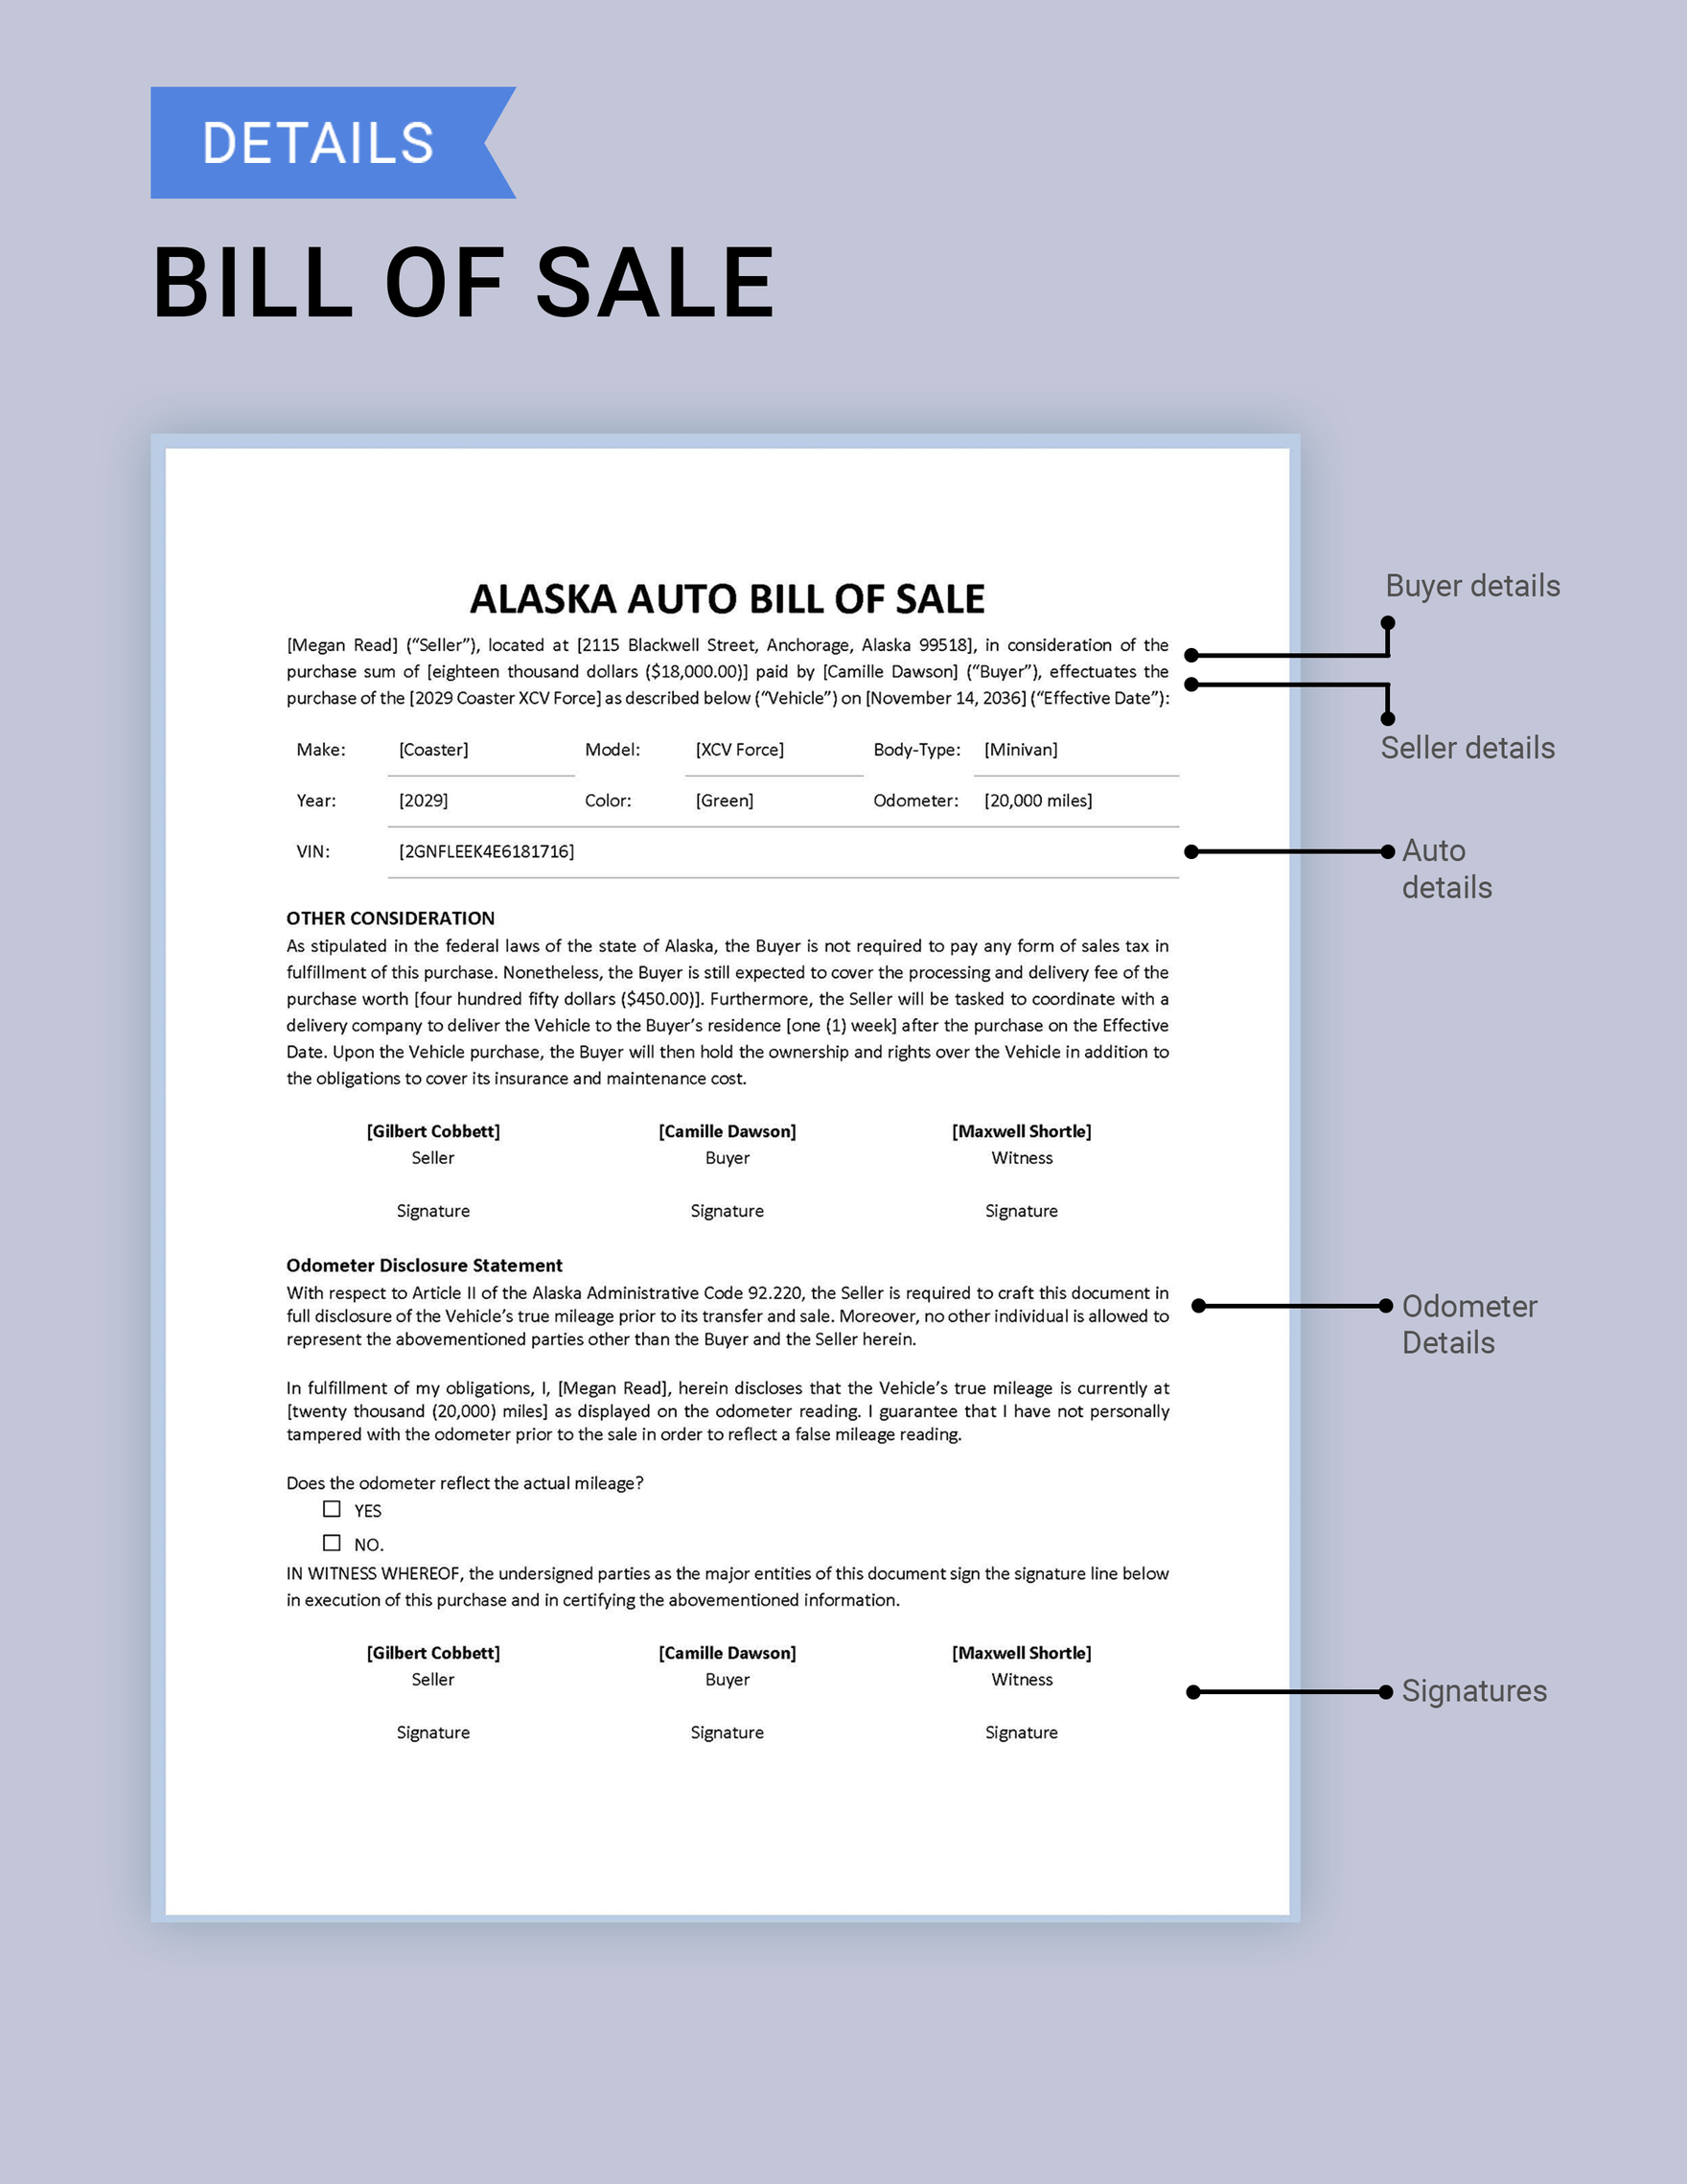 Alaska Auto Bill of Sale Form Template